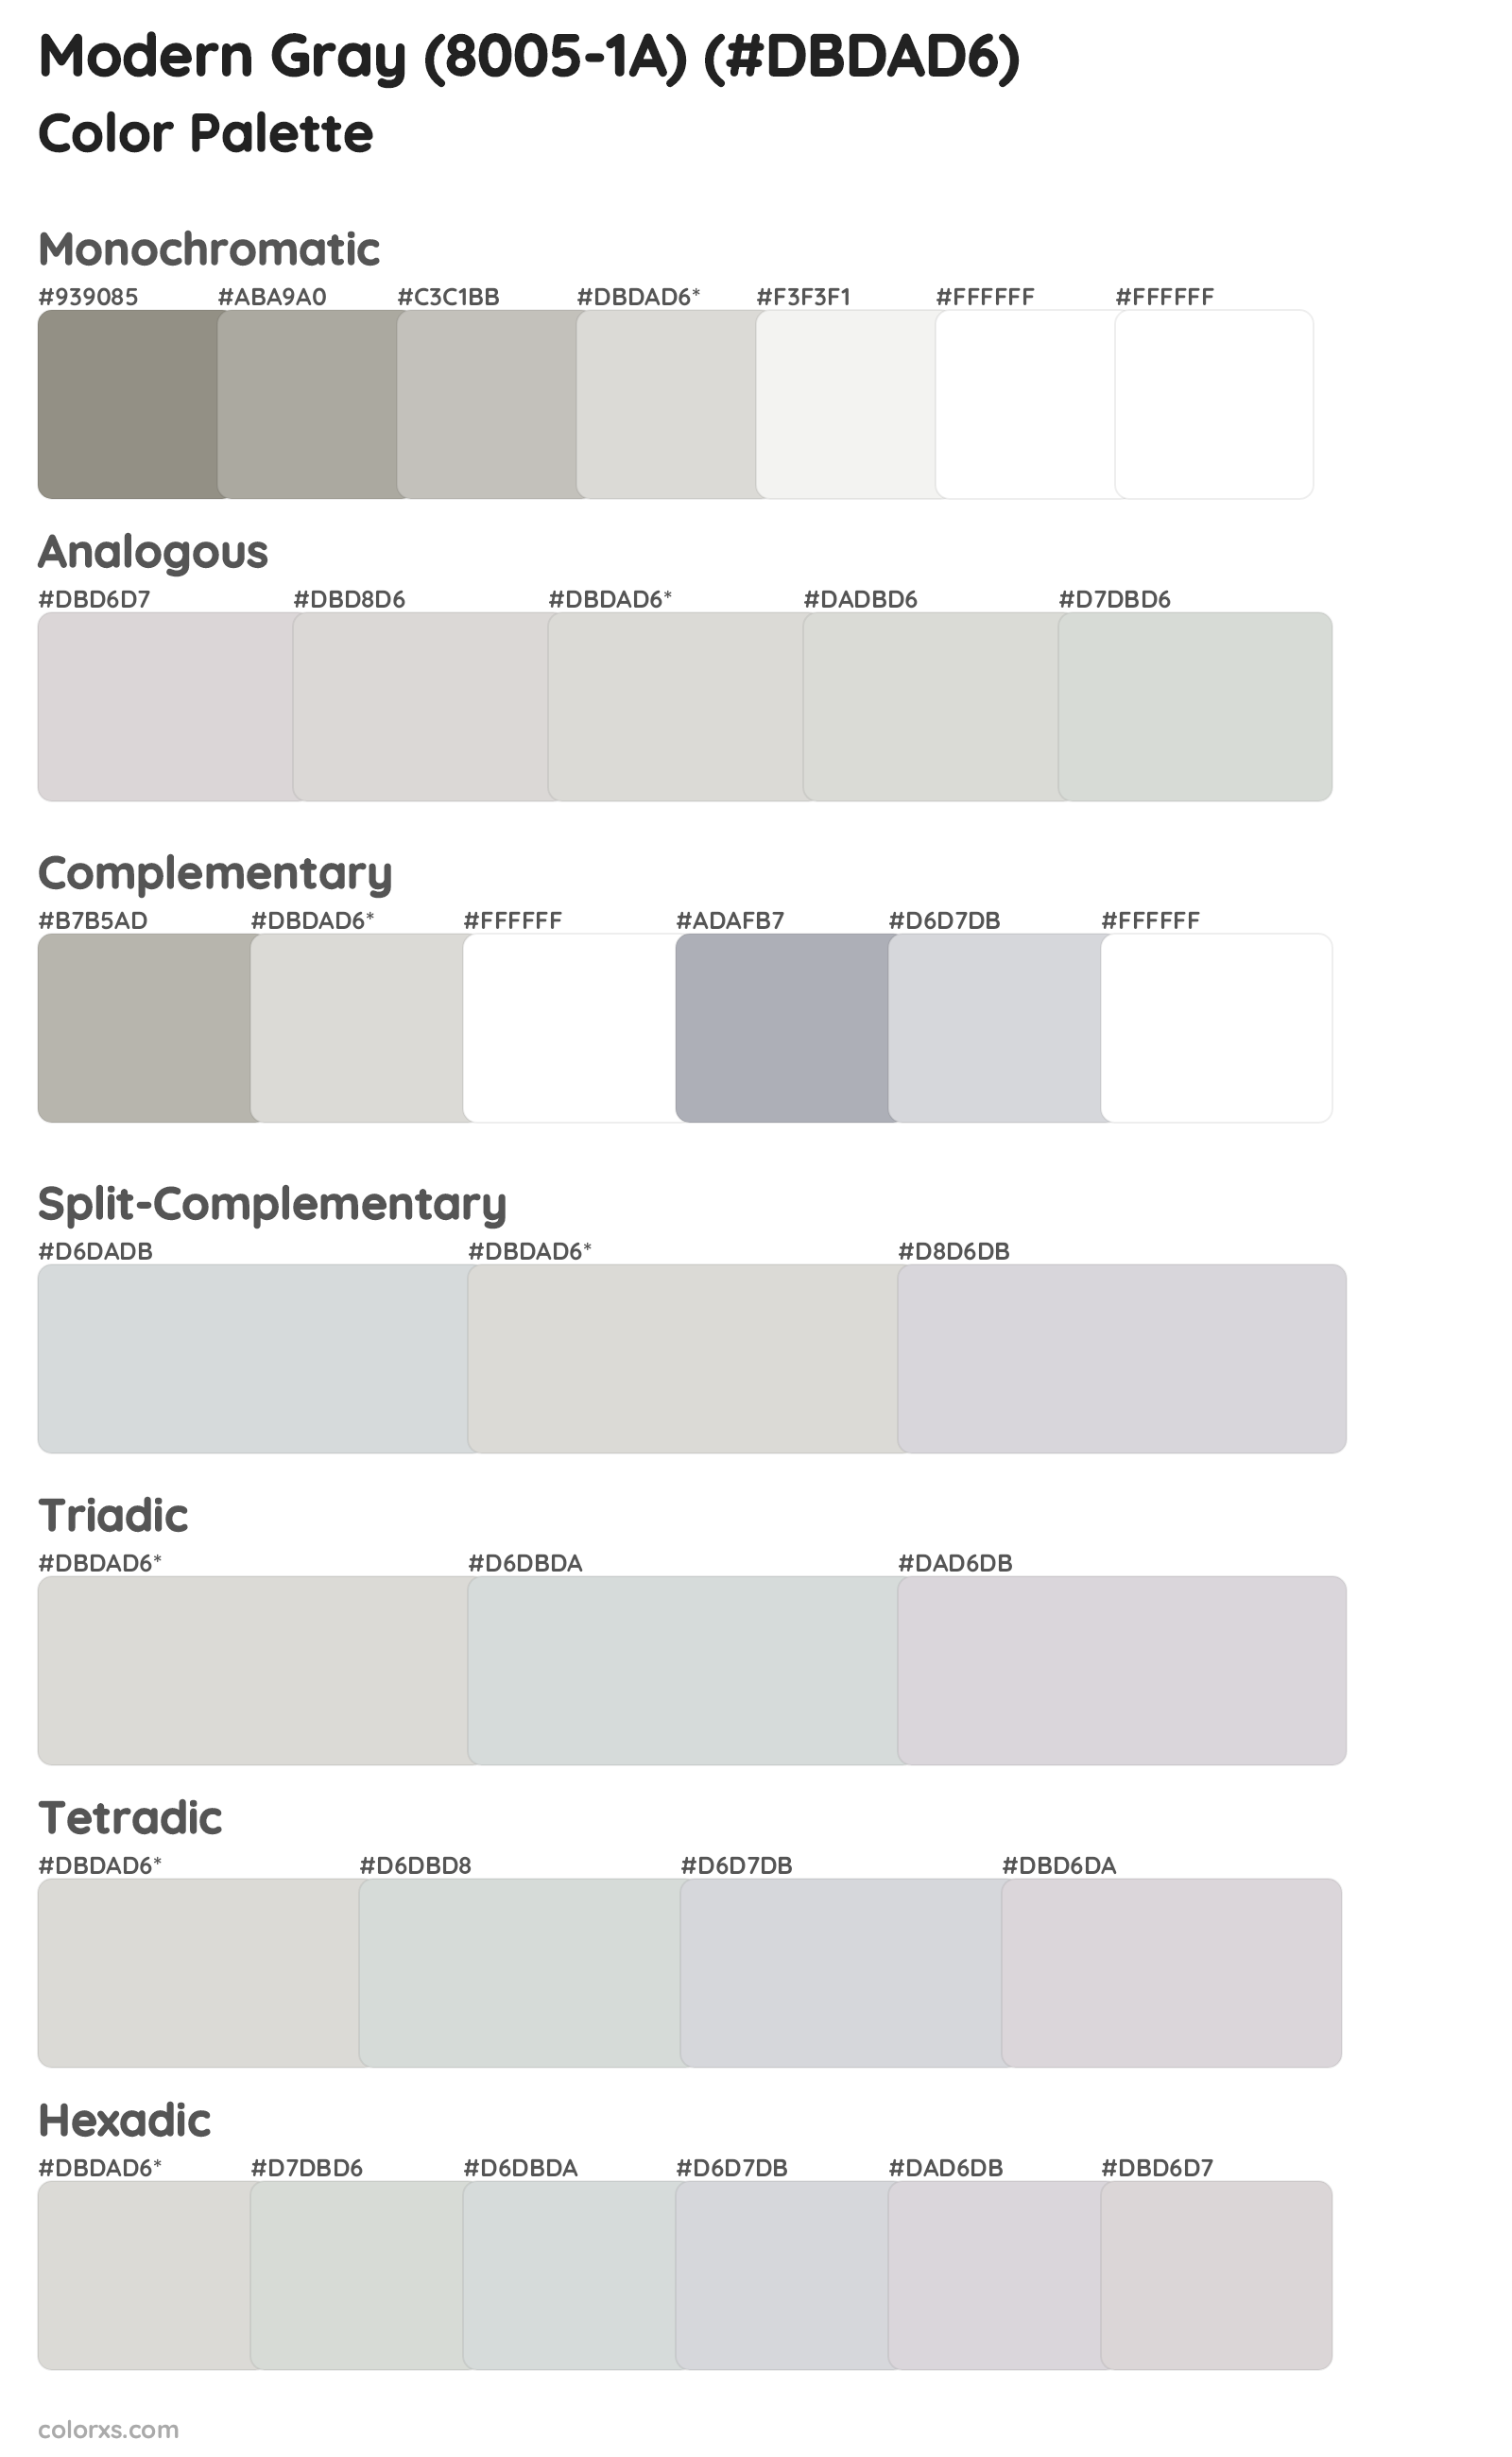 Modern Gray (8005-1A) Color Scheme Palettes